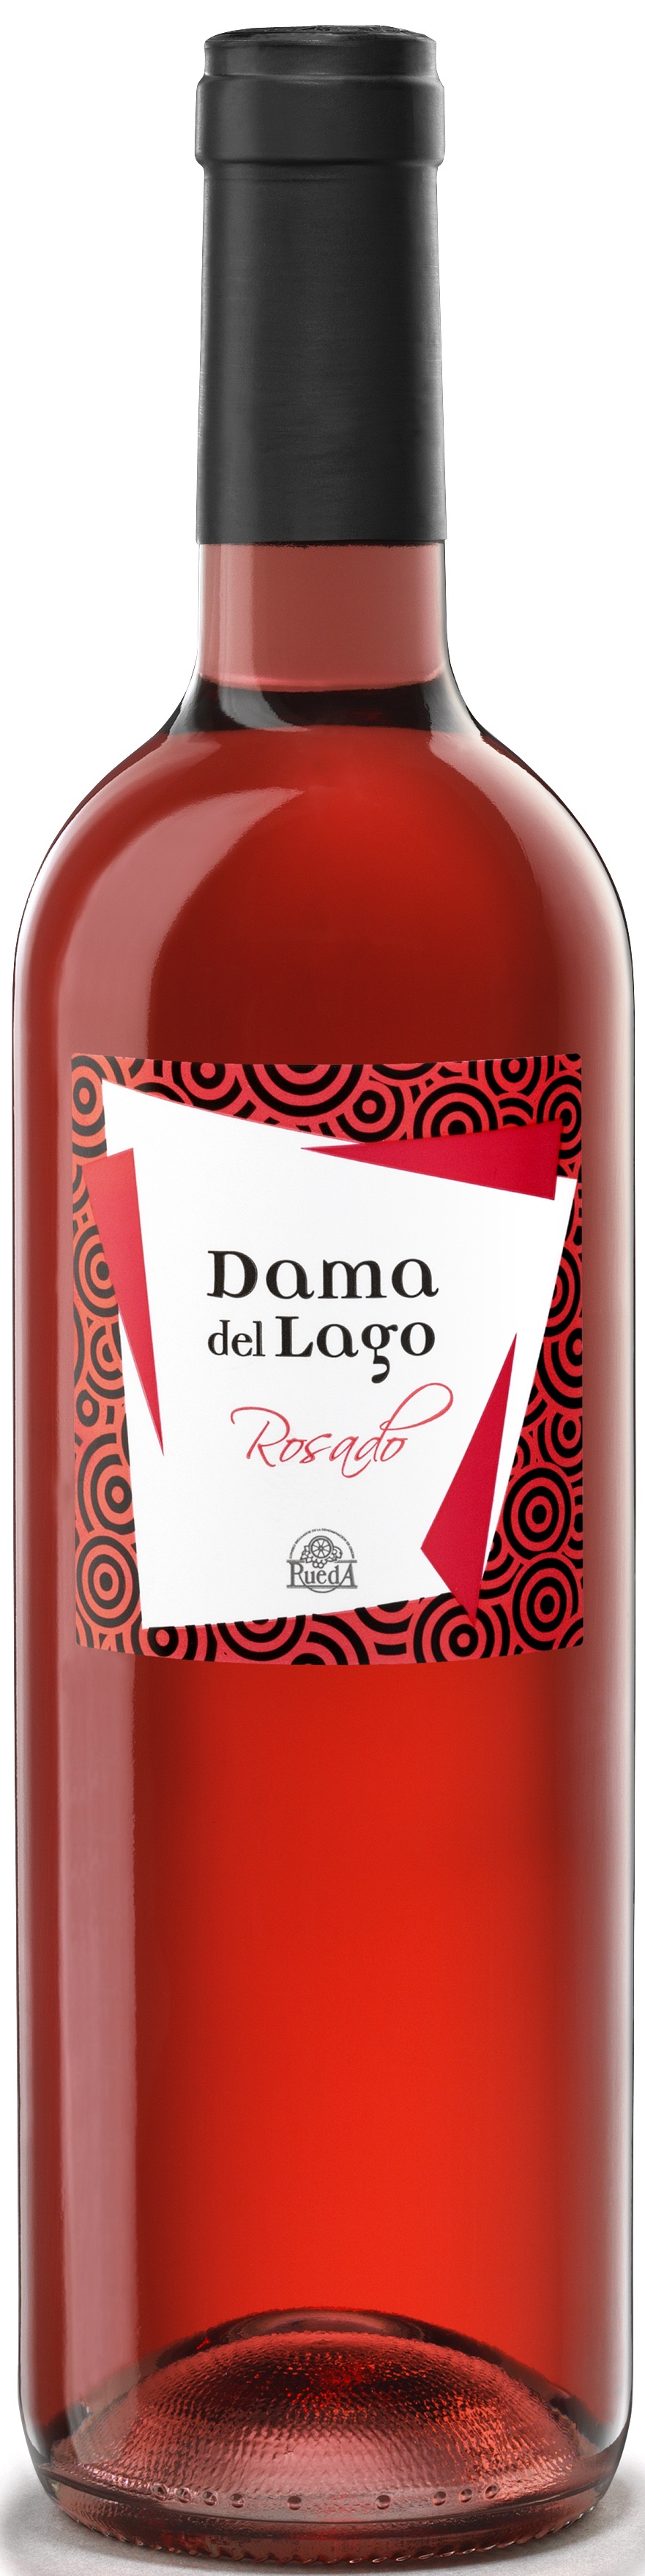 Imagen de la botella de Vino Dama del Lago Rosado